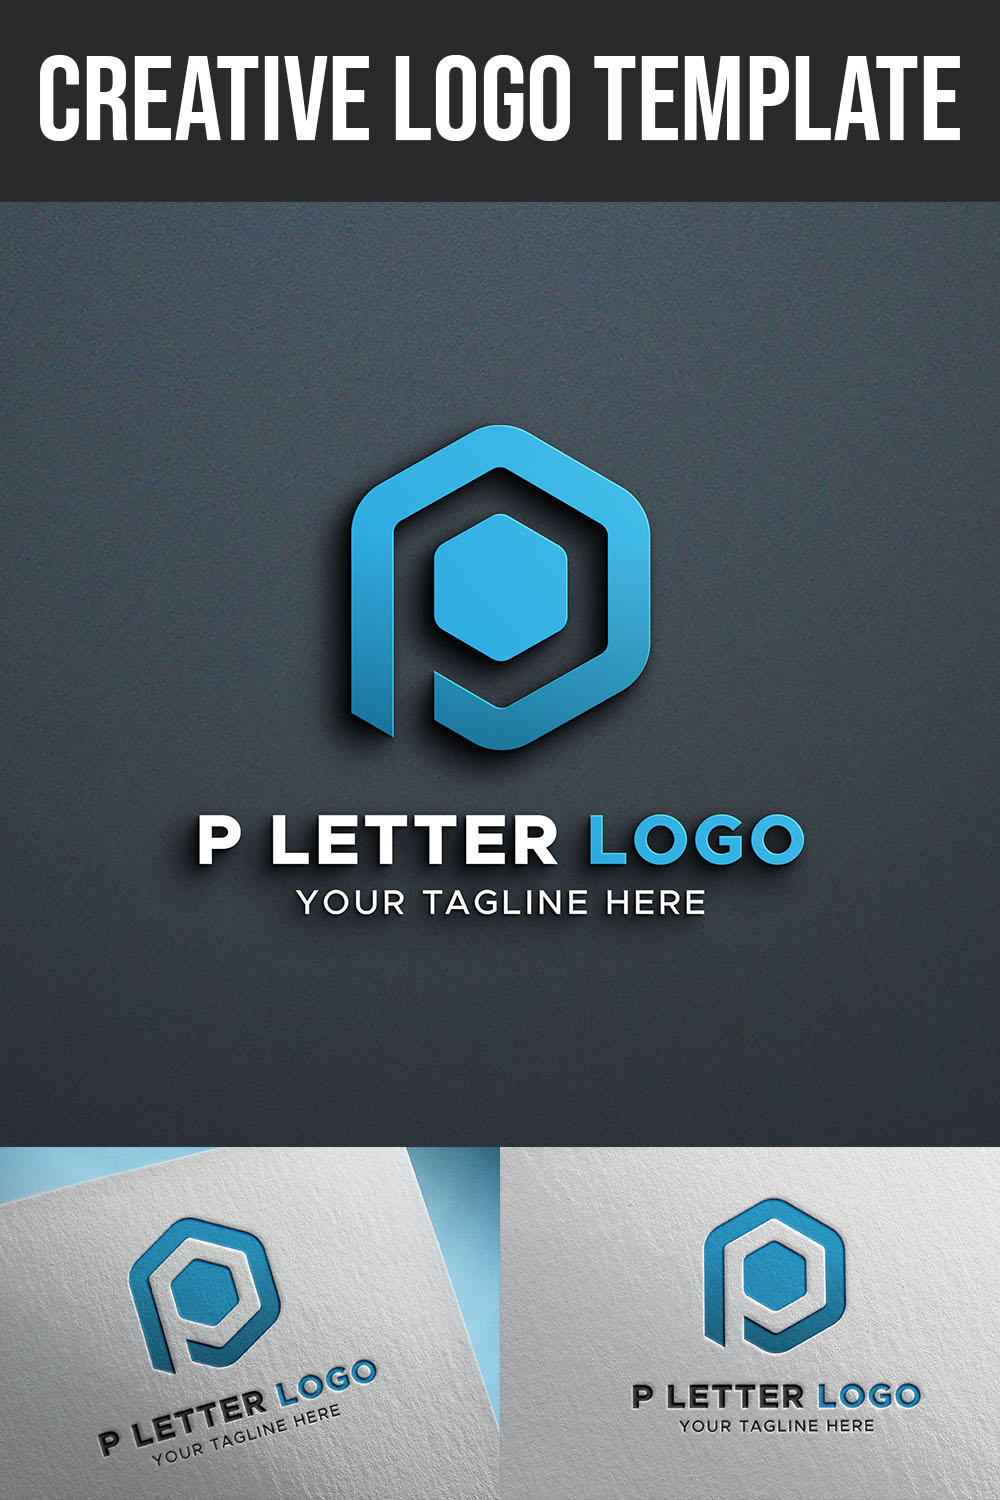 pinterest image Creative Logo Template.